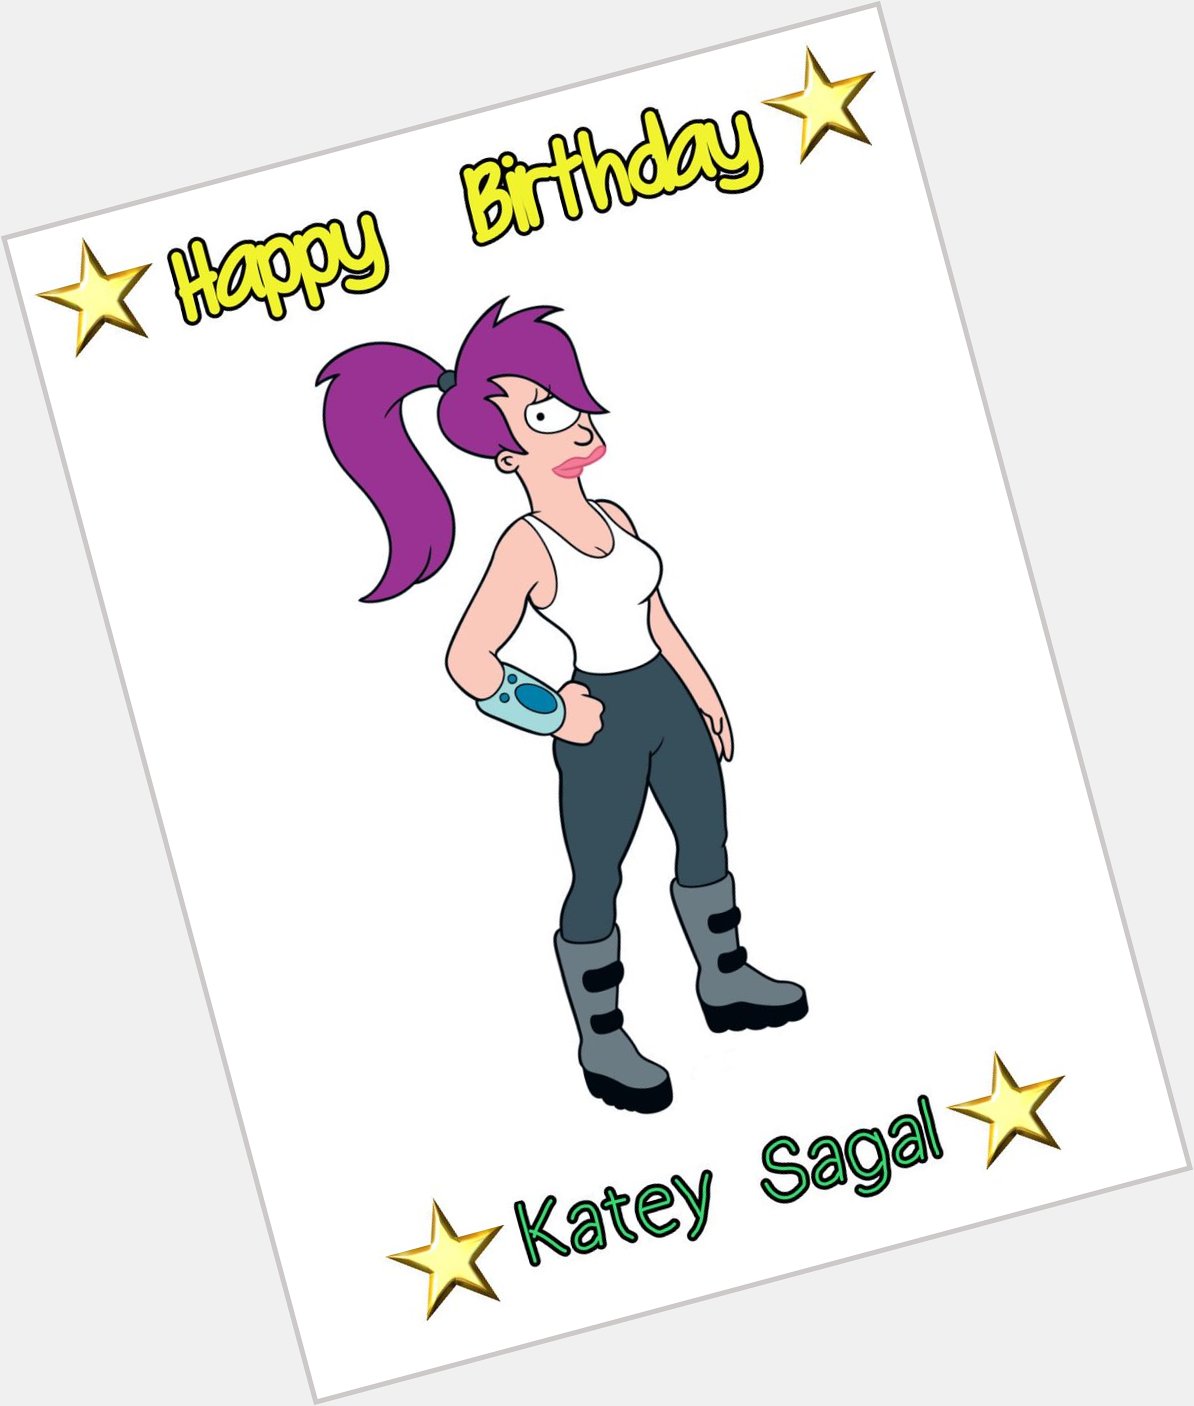 Happy Birthday Katey Sagal (Leela) 